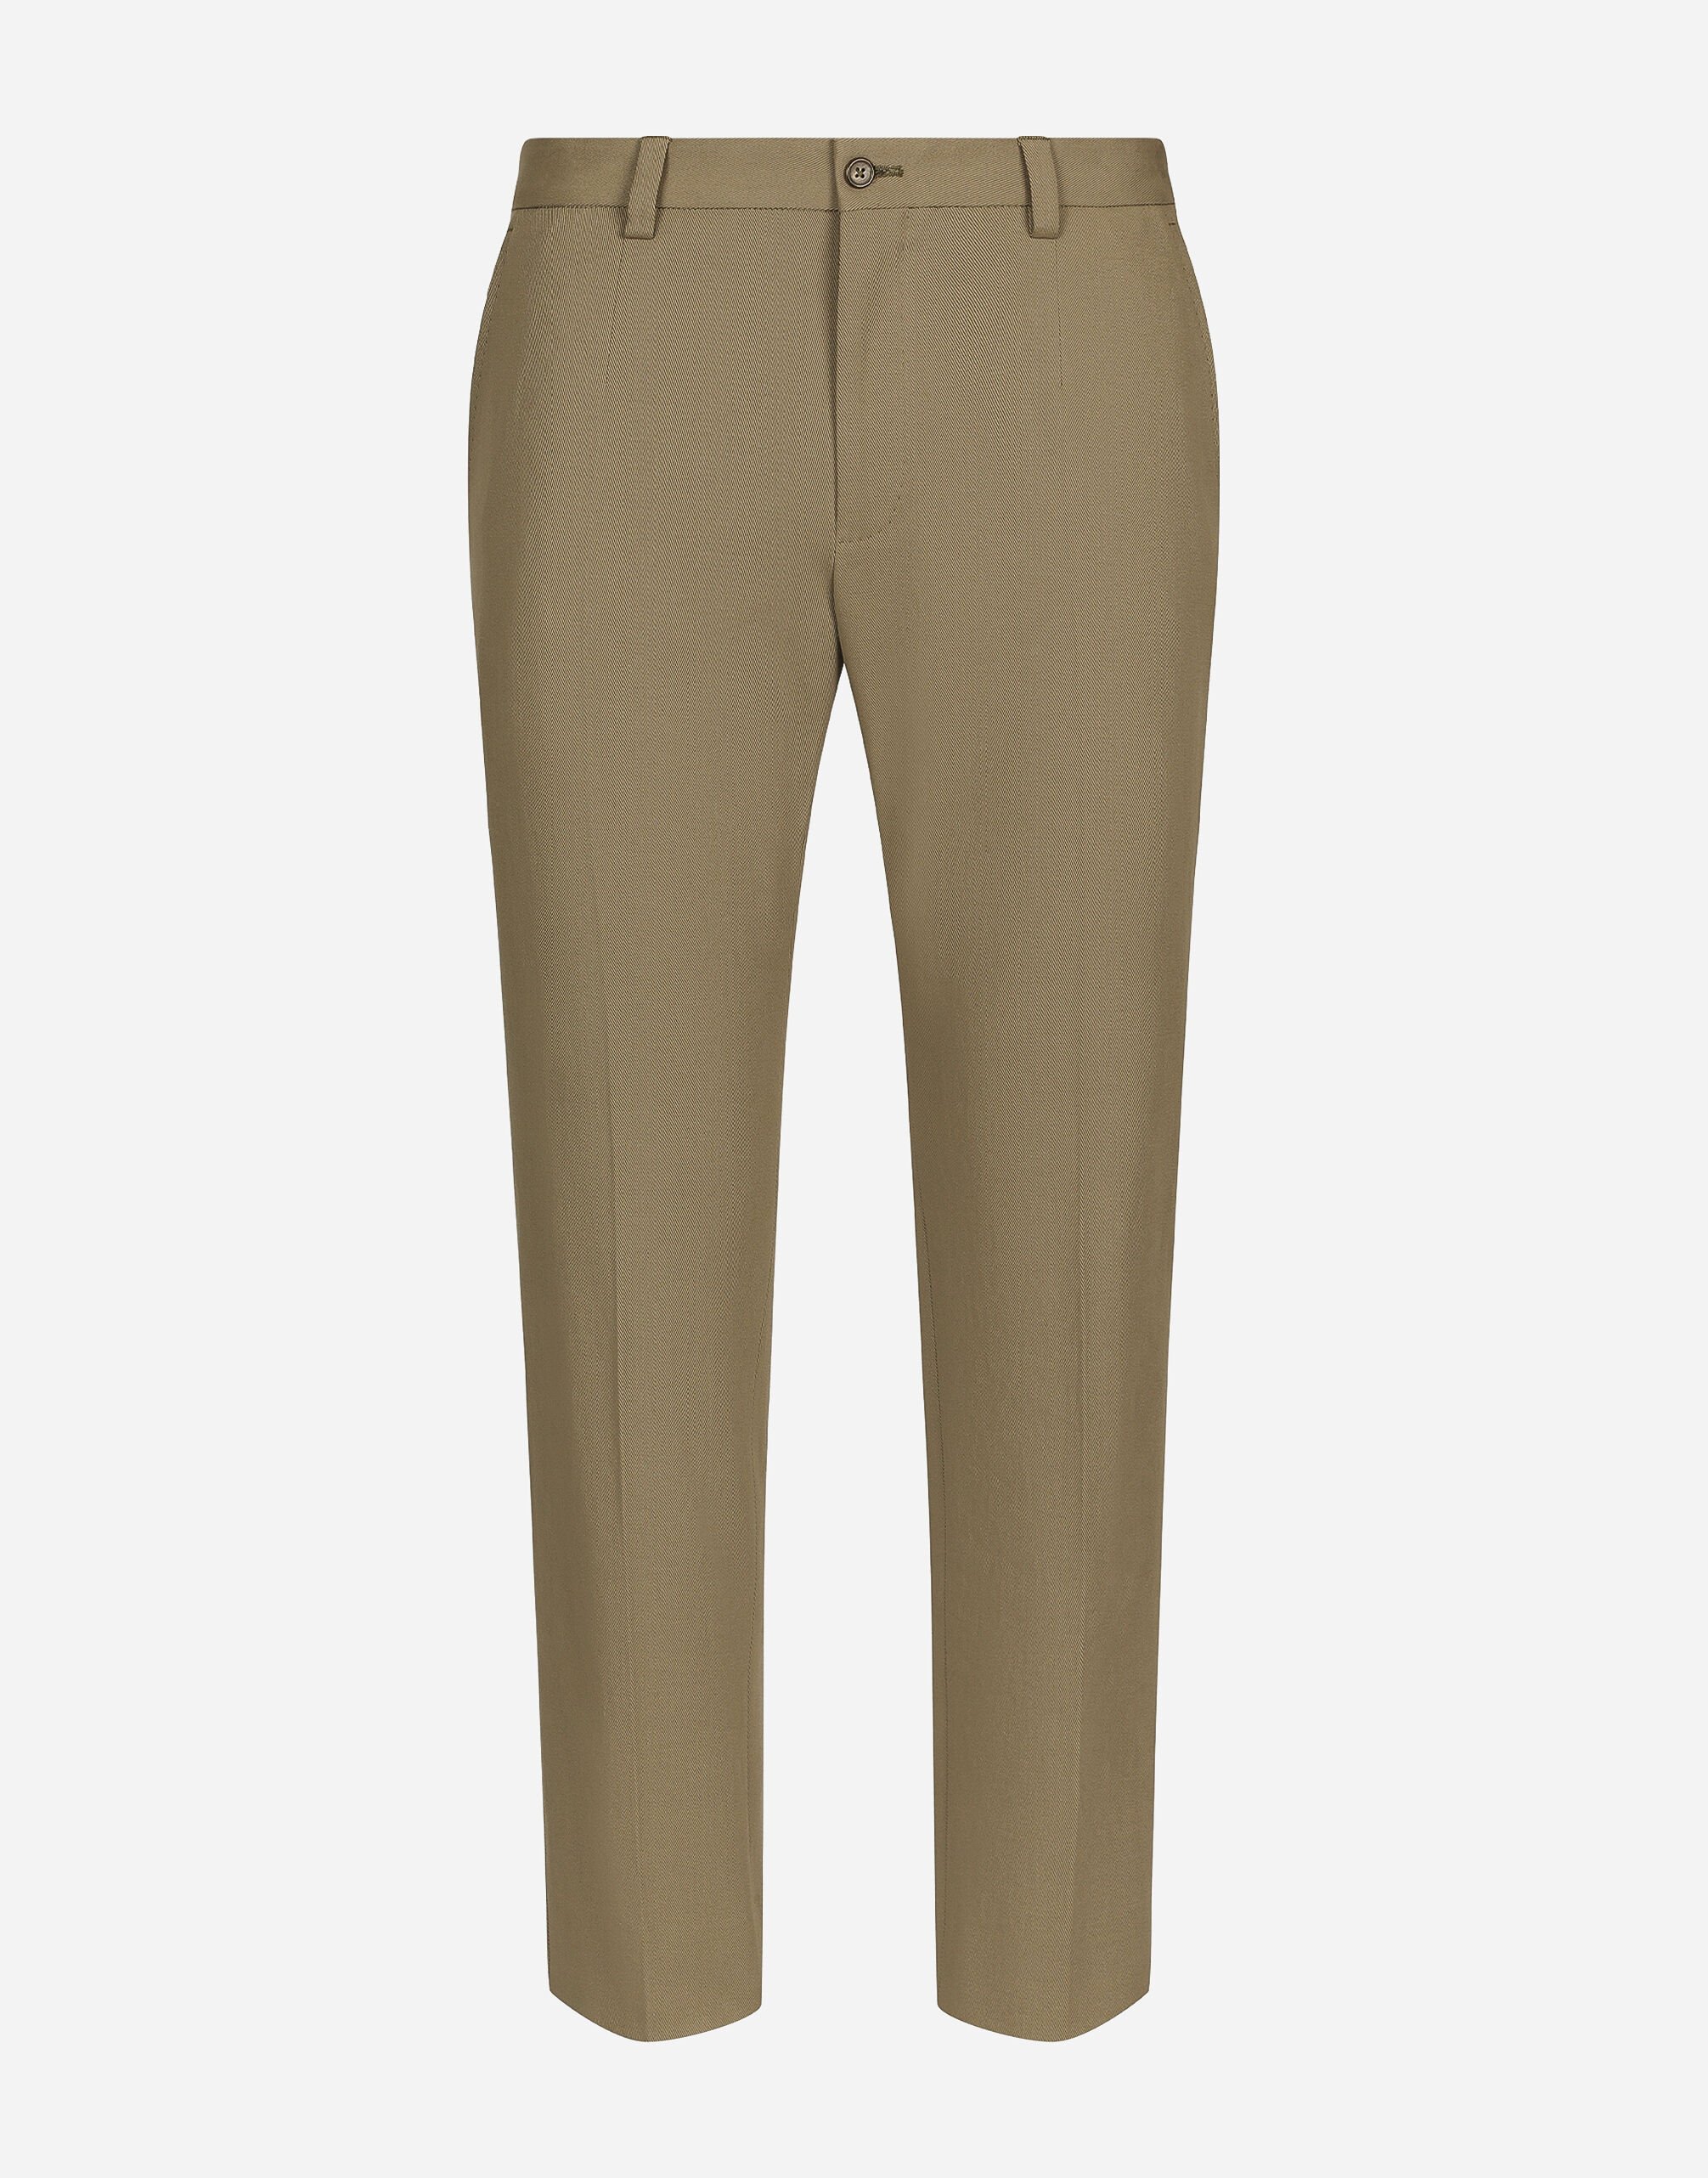 Dolce & Gabbana Stretch cotton and cashmere pants Brown G8RN8TG7K1U